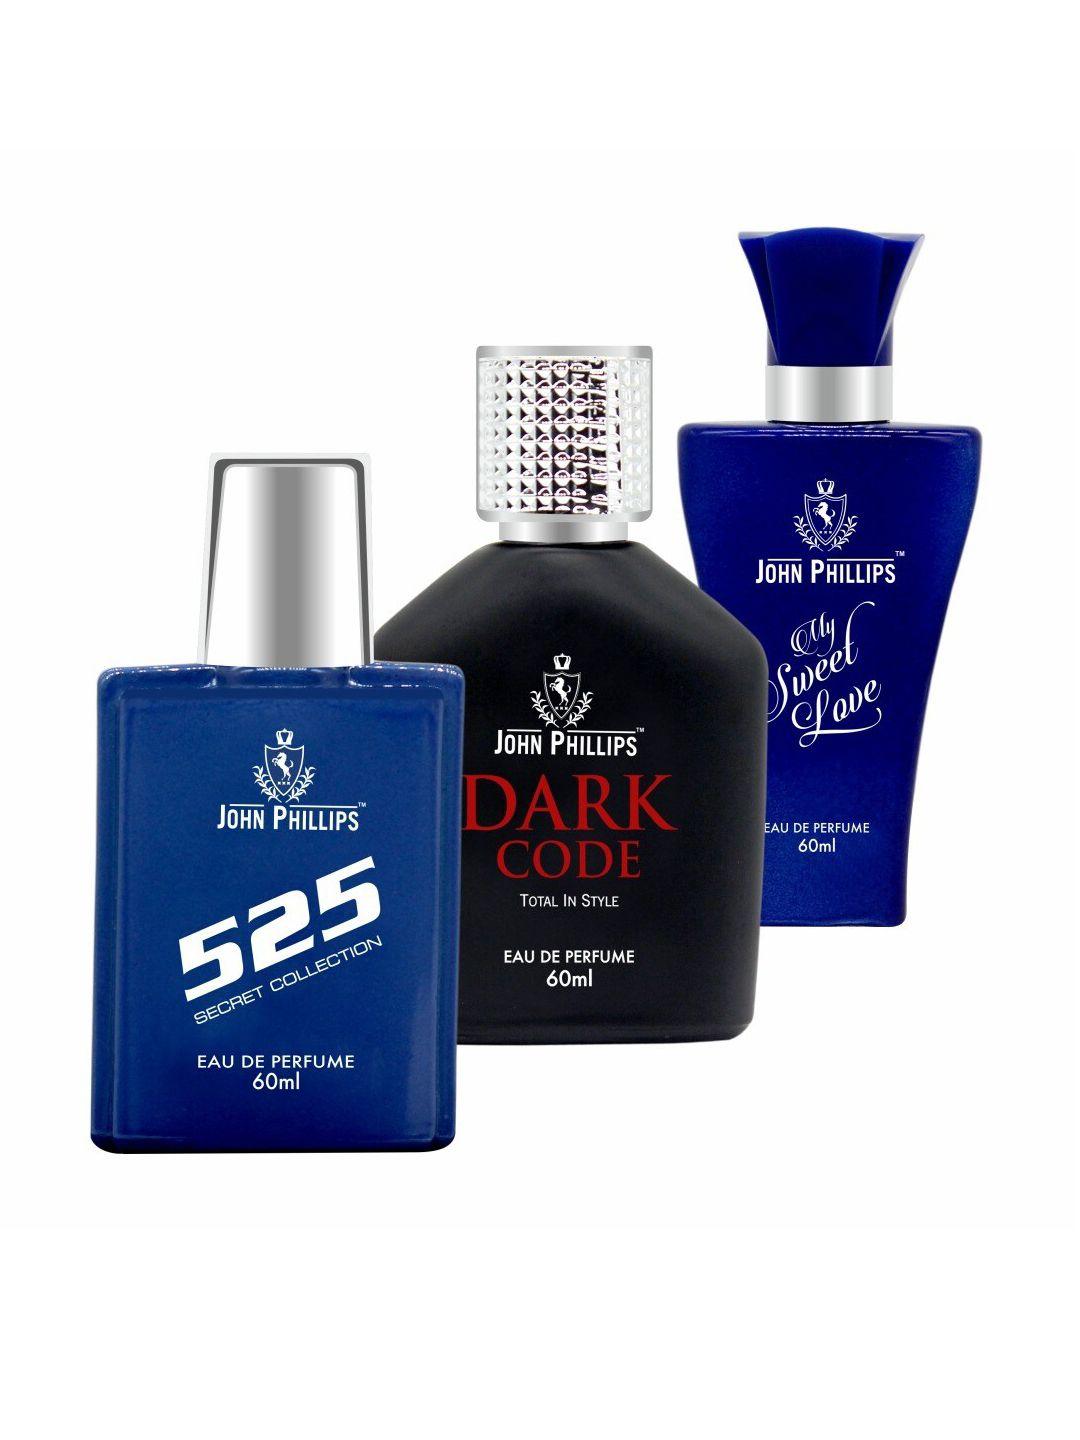 john phillips set of 3 eau de parfum - 525 + dark code + my sweet love - 60ml each